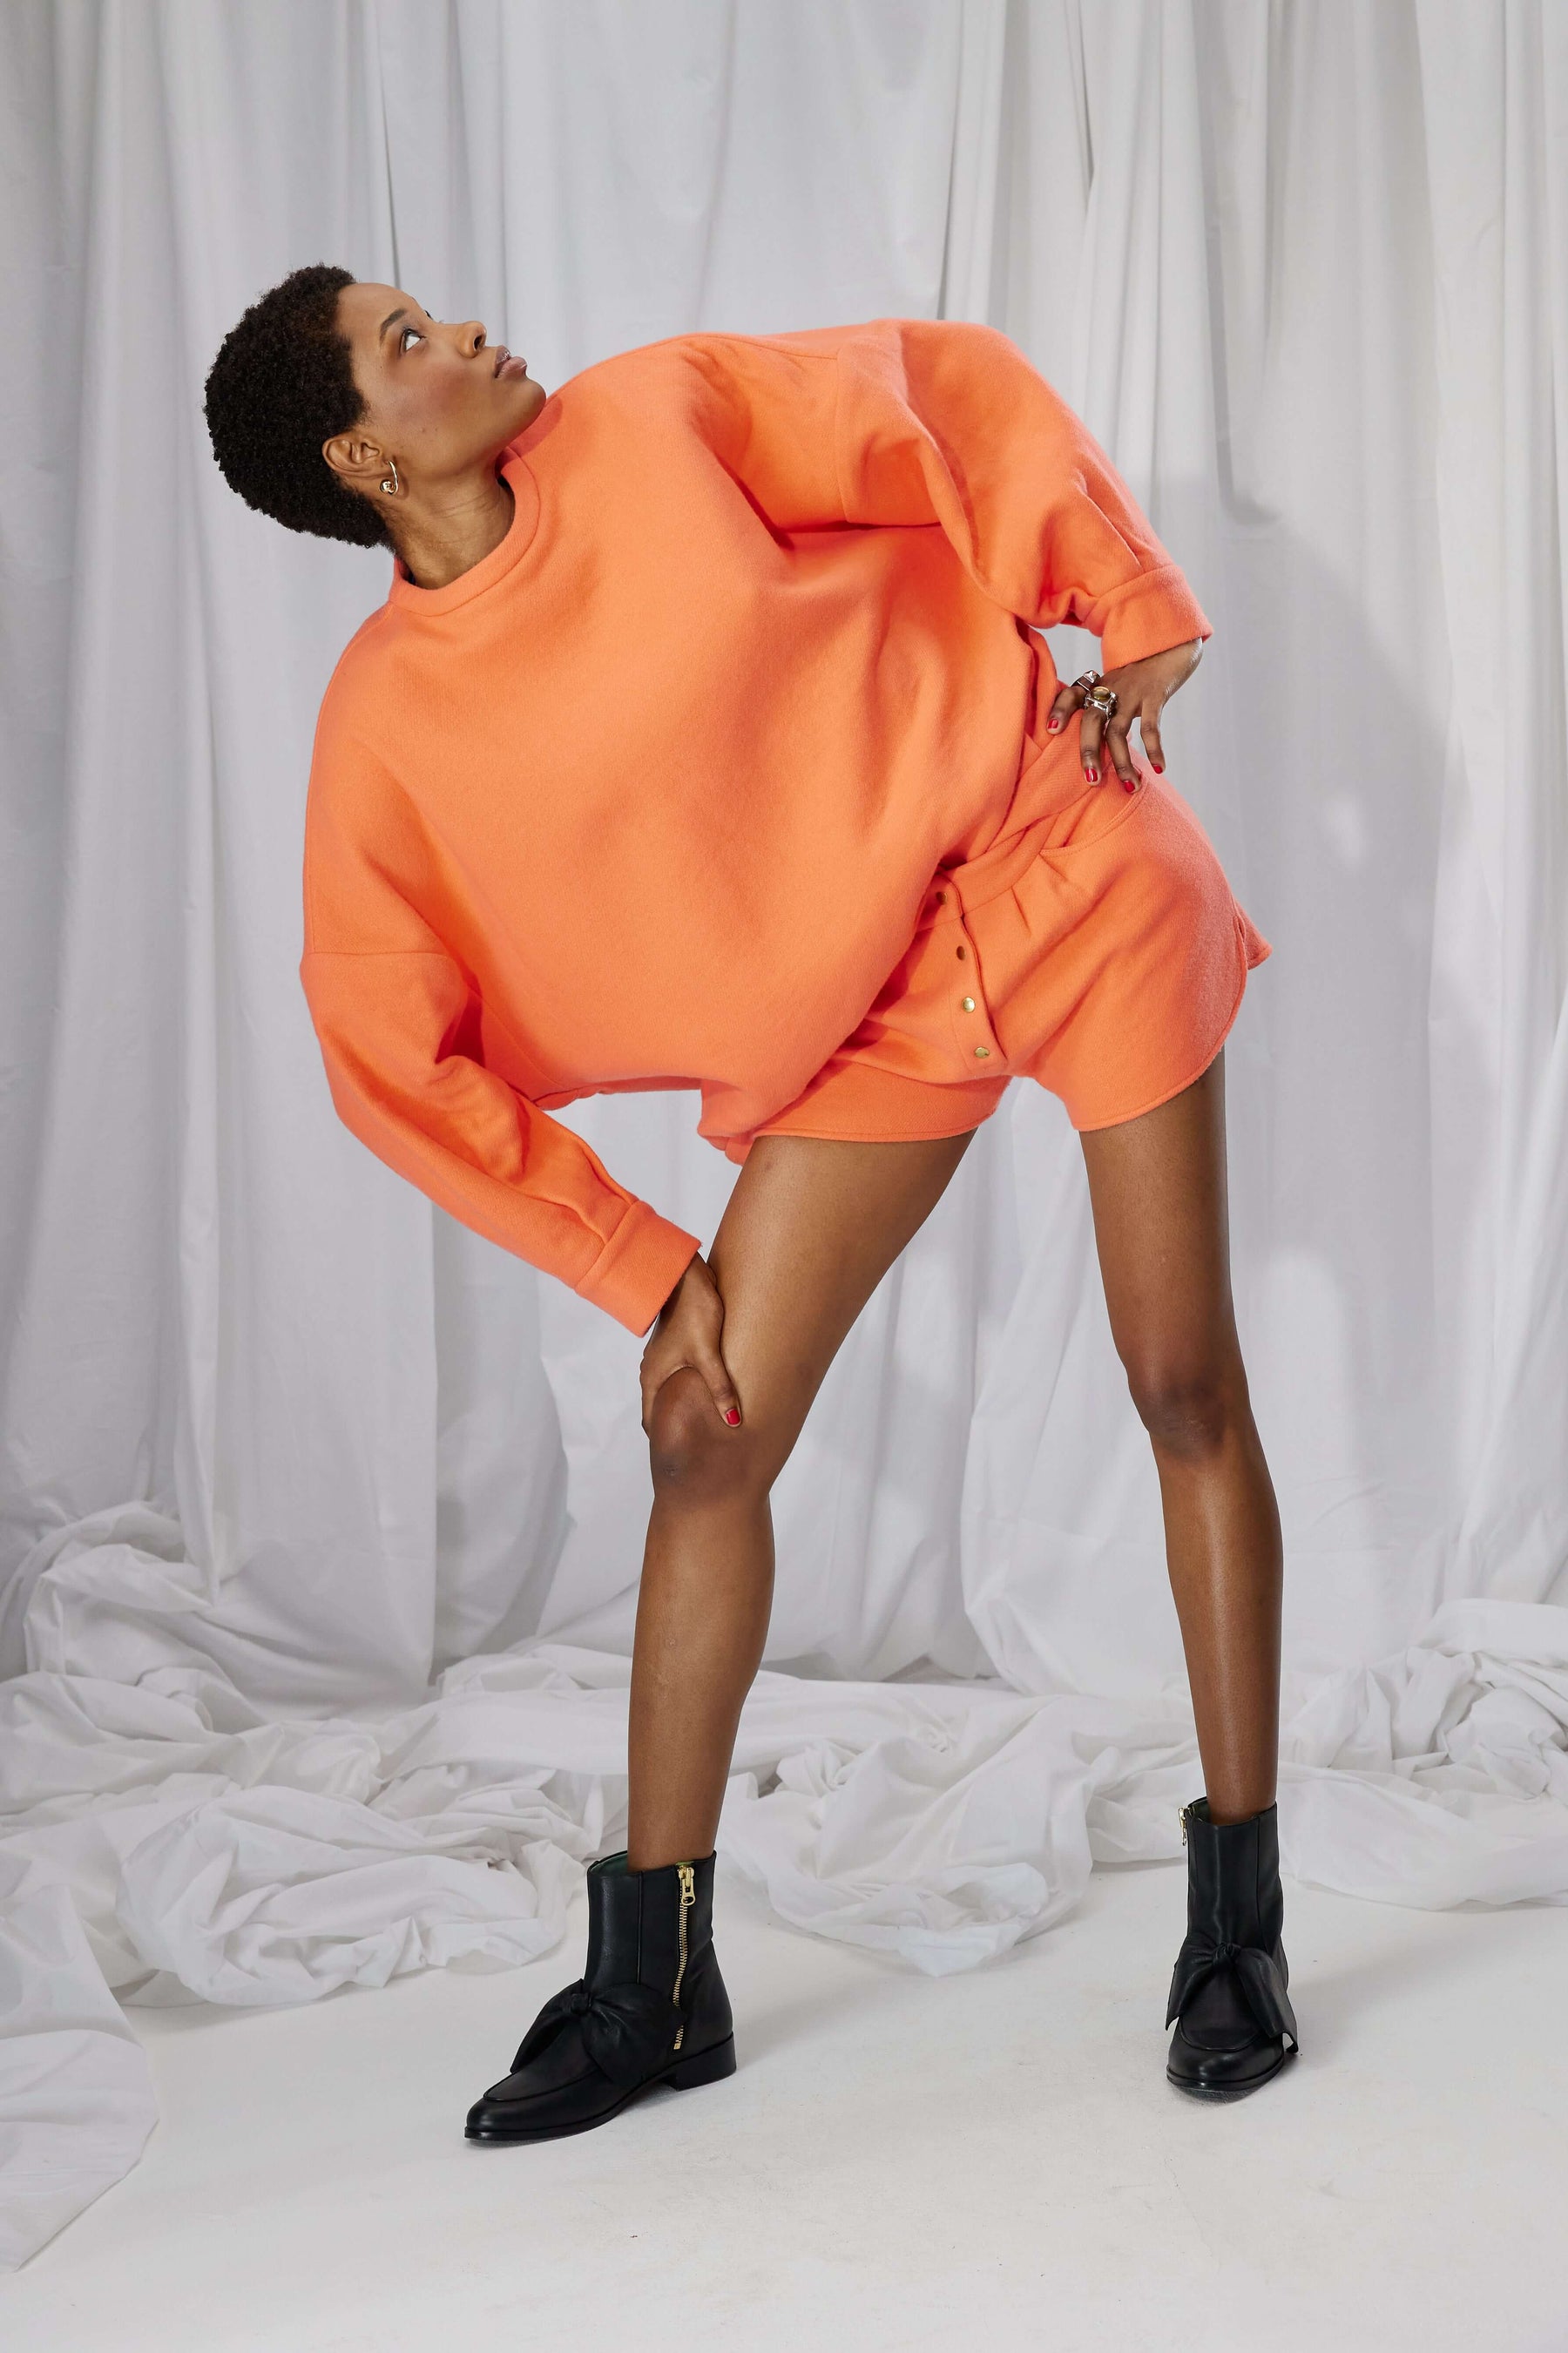 Harlem jumper in Reef orange woolen fabric and cashmere